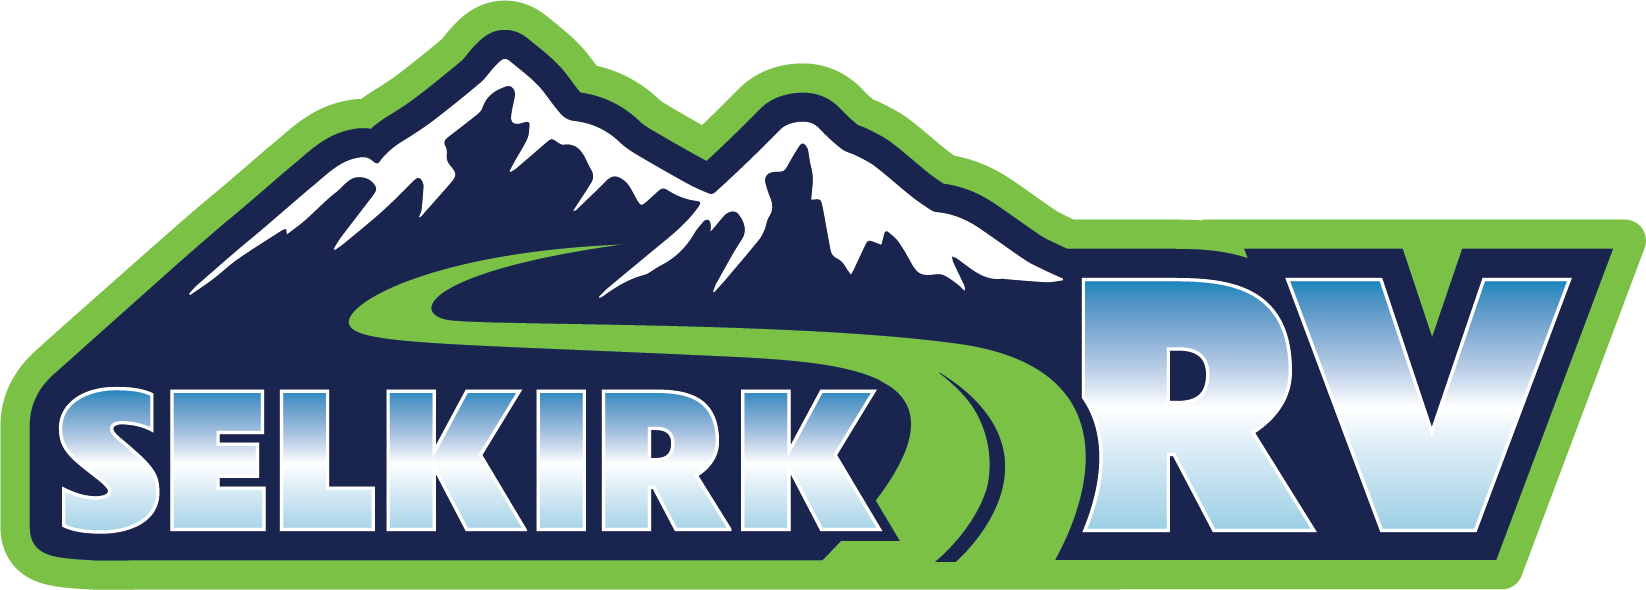 Selkirk RV and Mobile RV Service in Hayden, Idaho - Toy Haulers, Camper Trailers, 5th Wheels